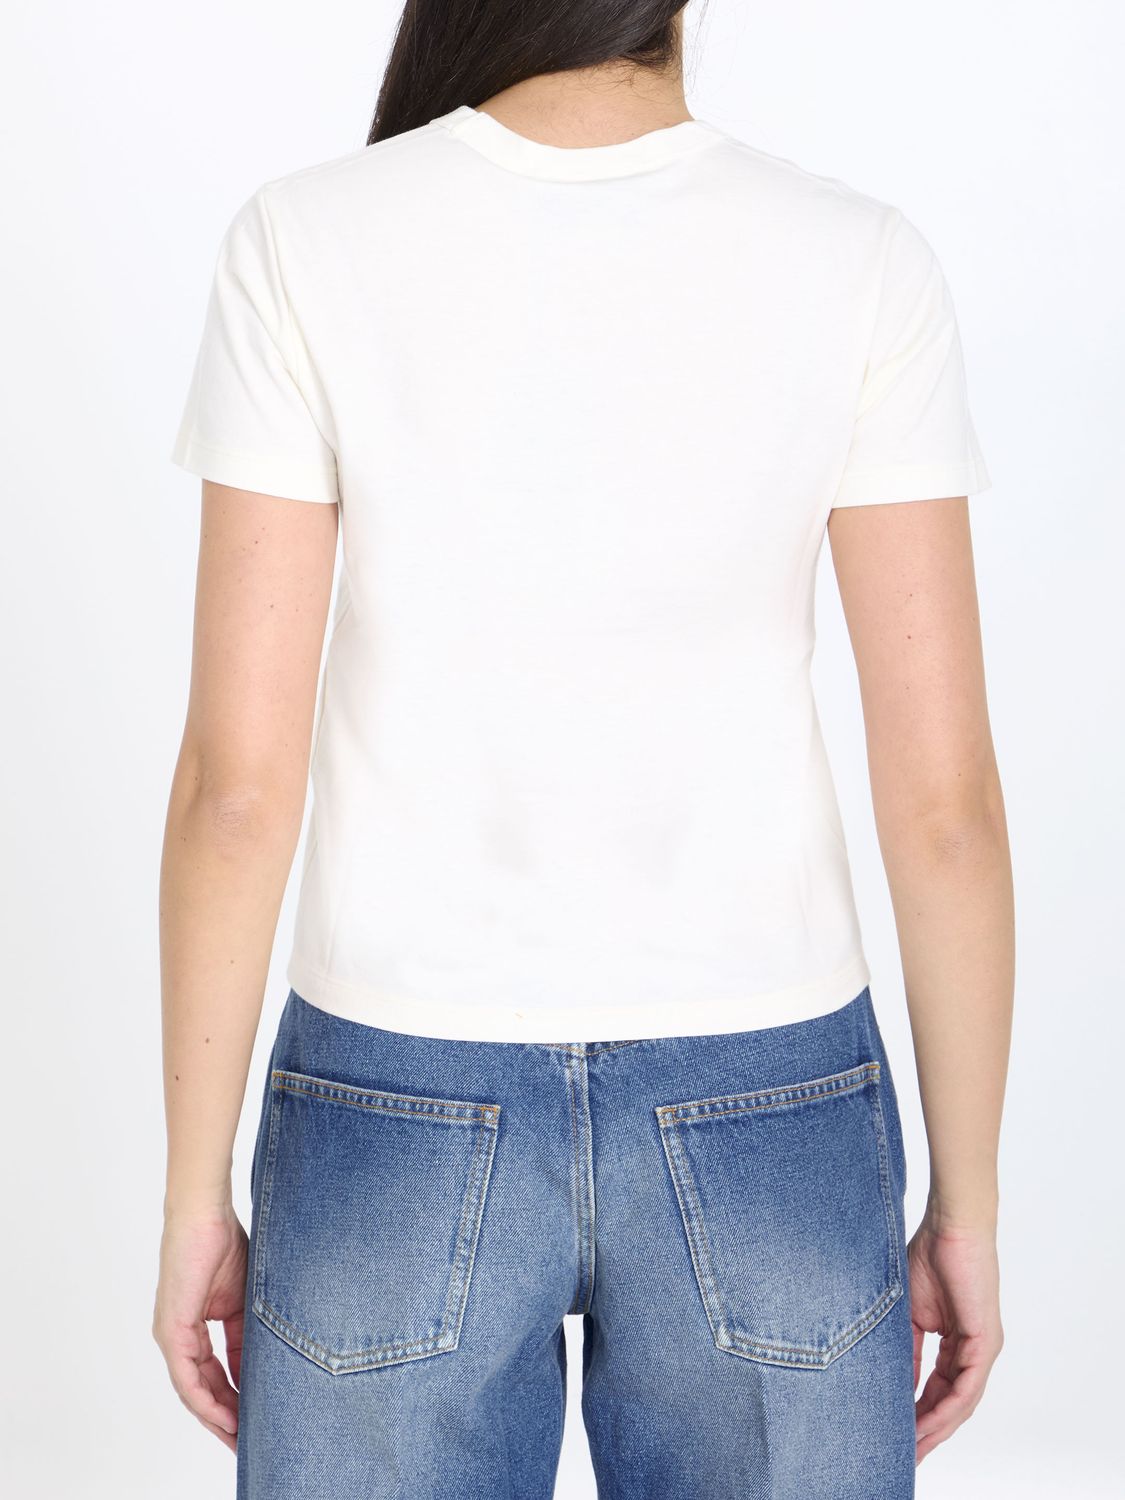 GUCCI White Interlocking G T-Shirt for Women